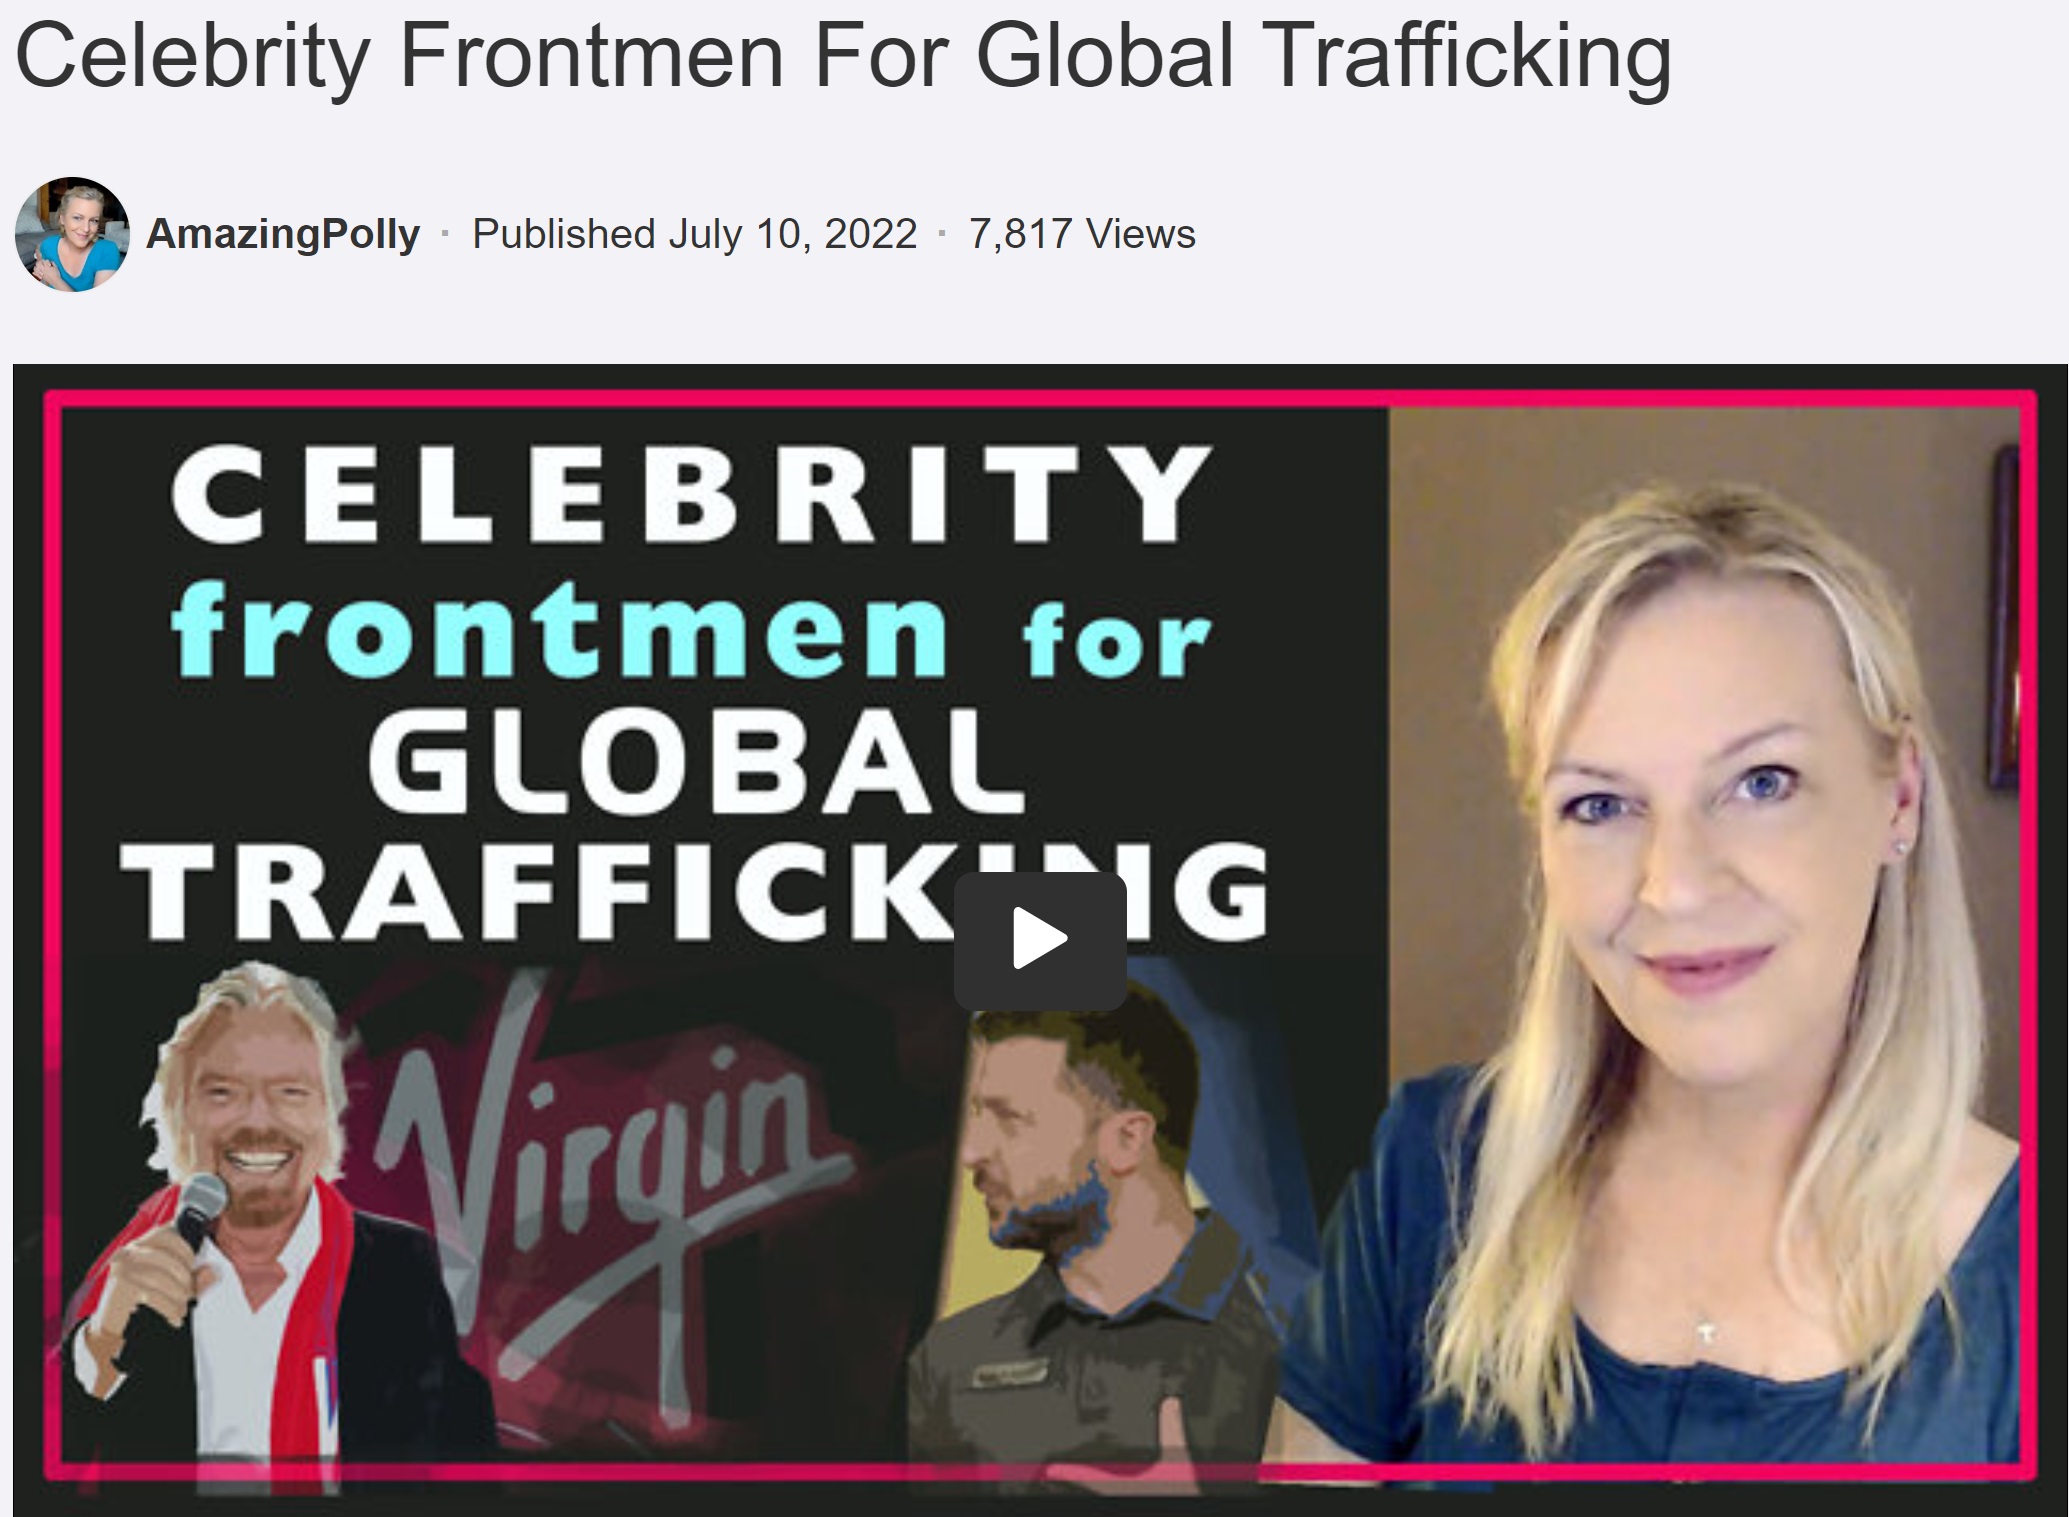 celebrity-frontmen-for-global-trafficking-of-women-and-amp-children-blurt